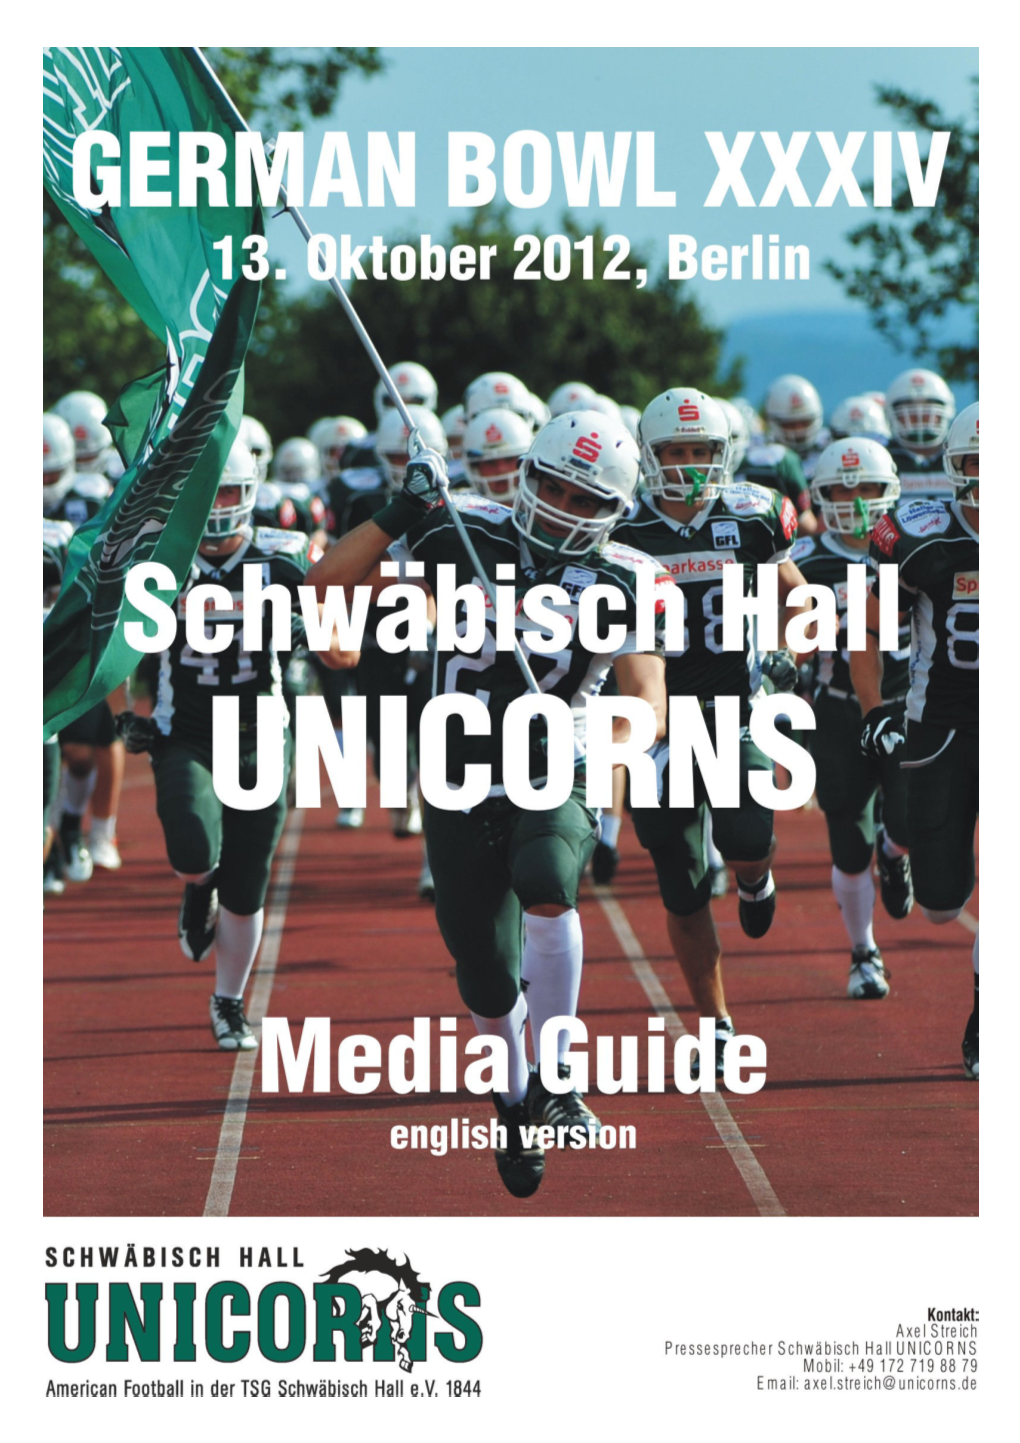 UNICORNS German Bowl 34 Media Guide Englisch